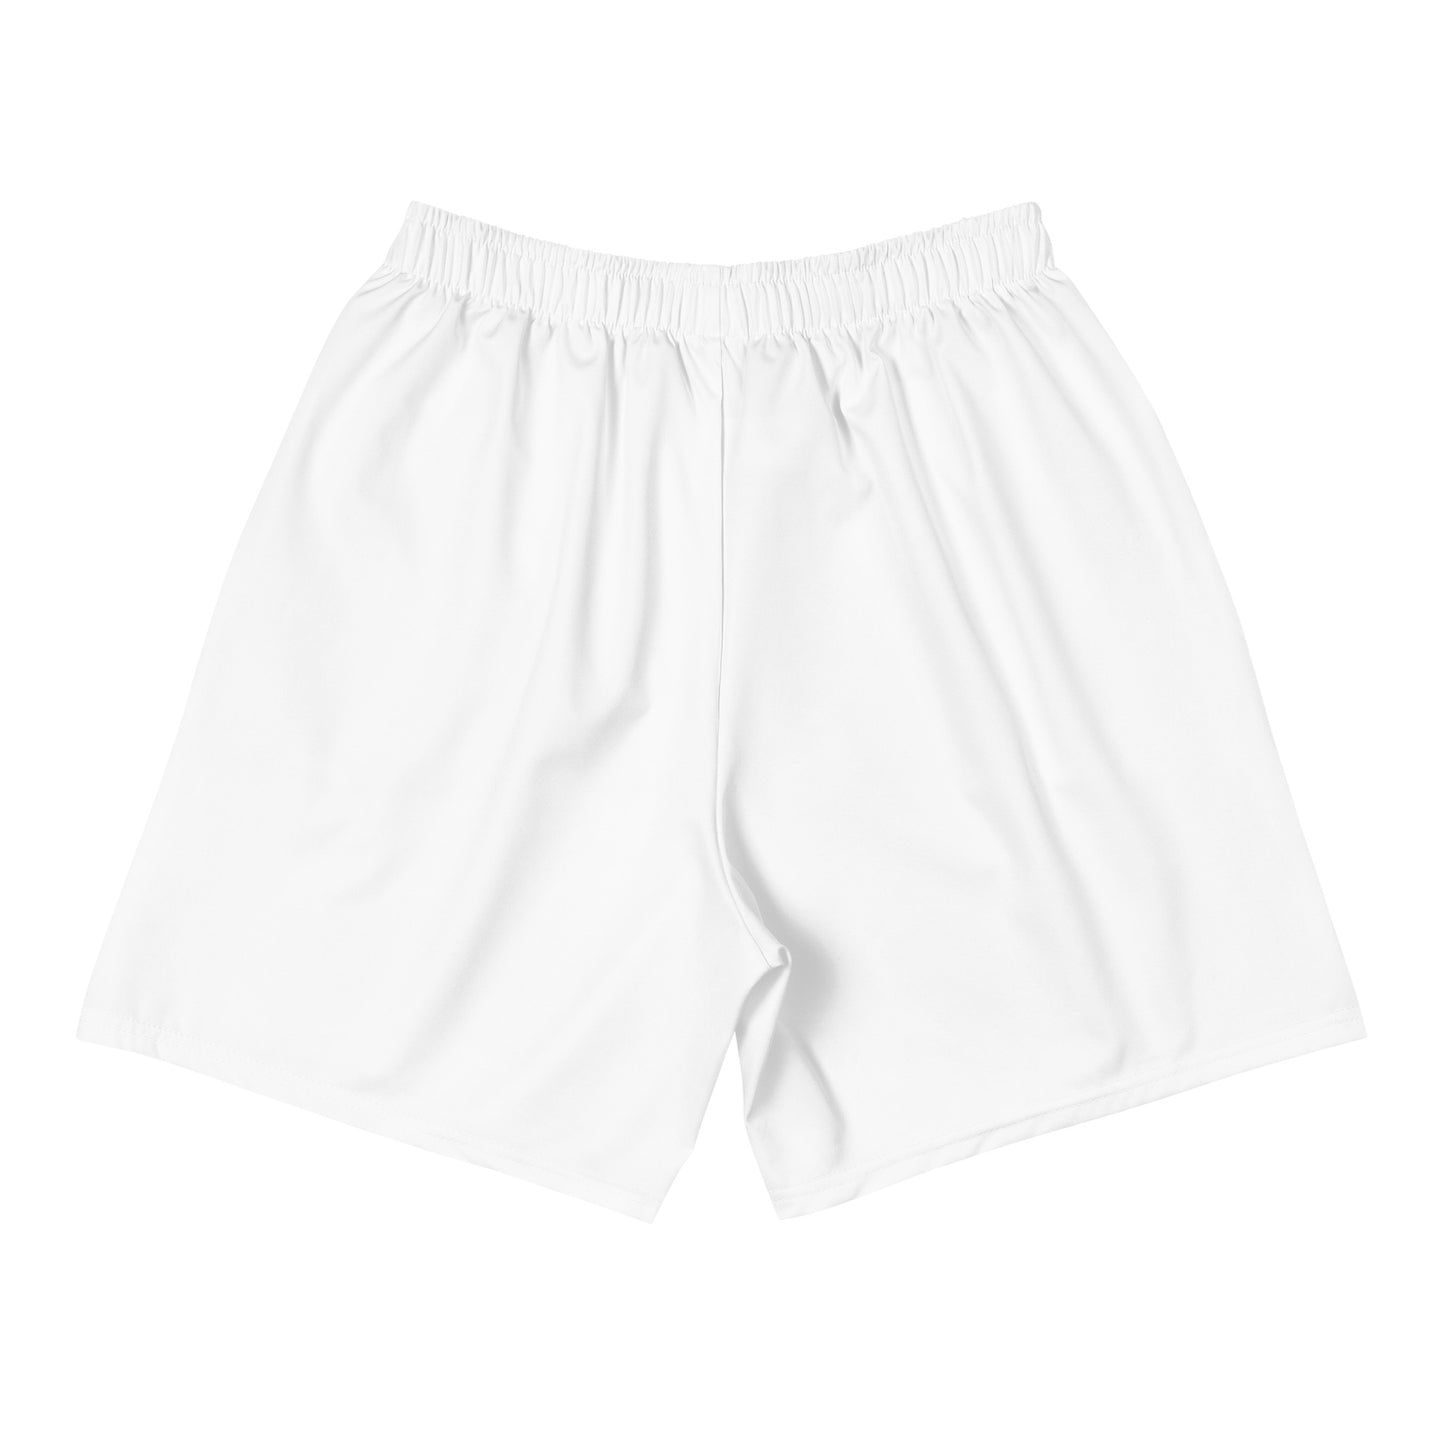 Men's Athletic Shorts [Design on Right Leg]